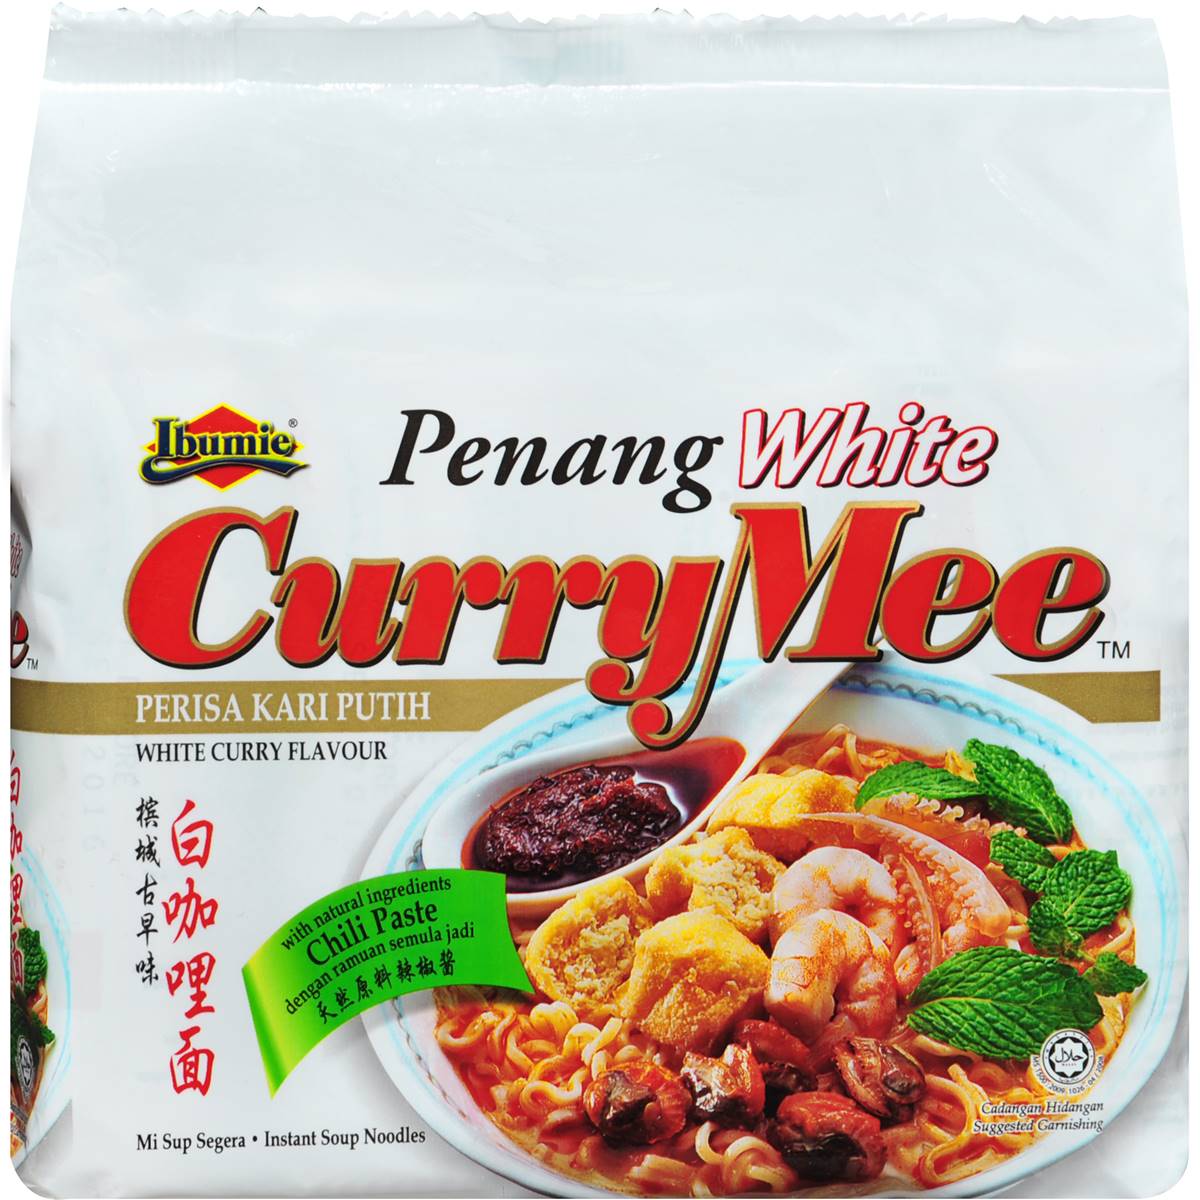 Ibumie Penang White Curry Mee 4x105g